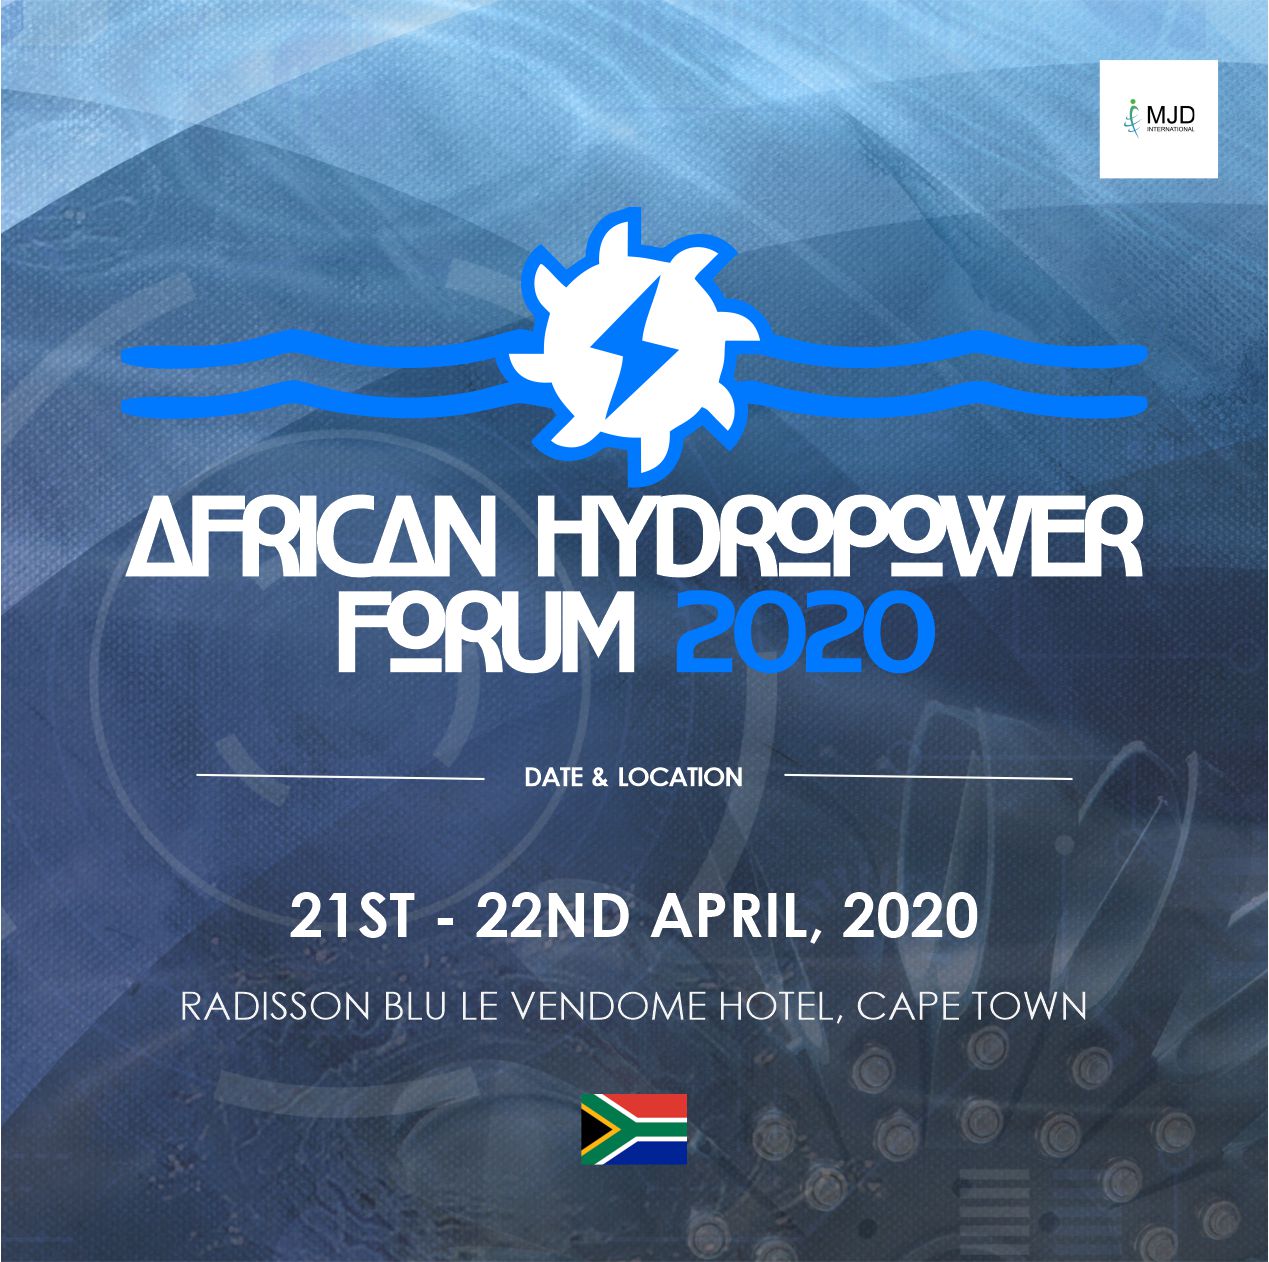 Africa Hydropower Forum organized by MJDVent International